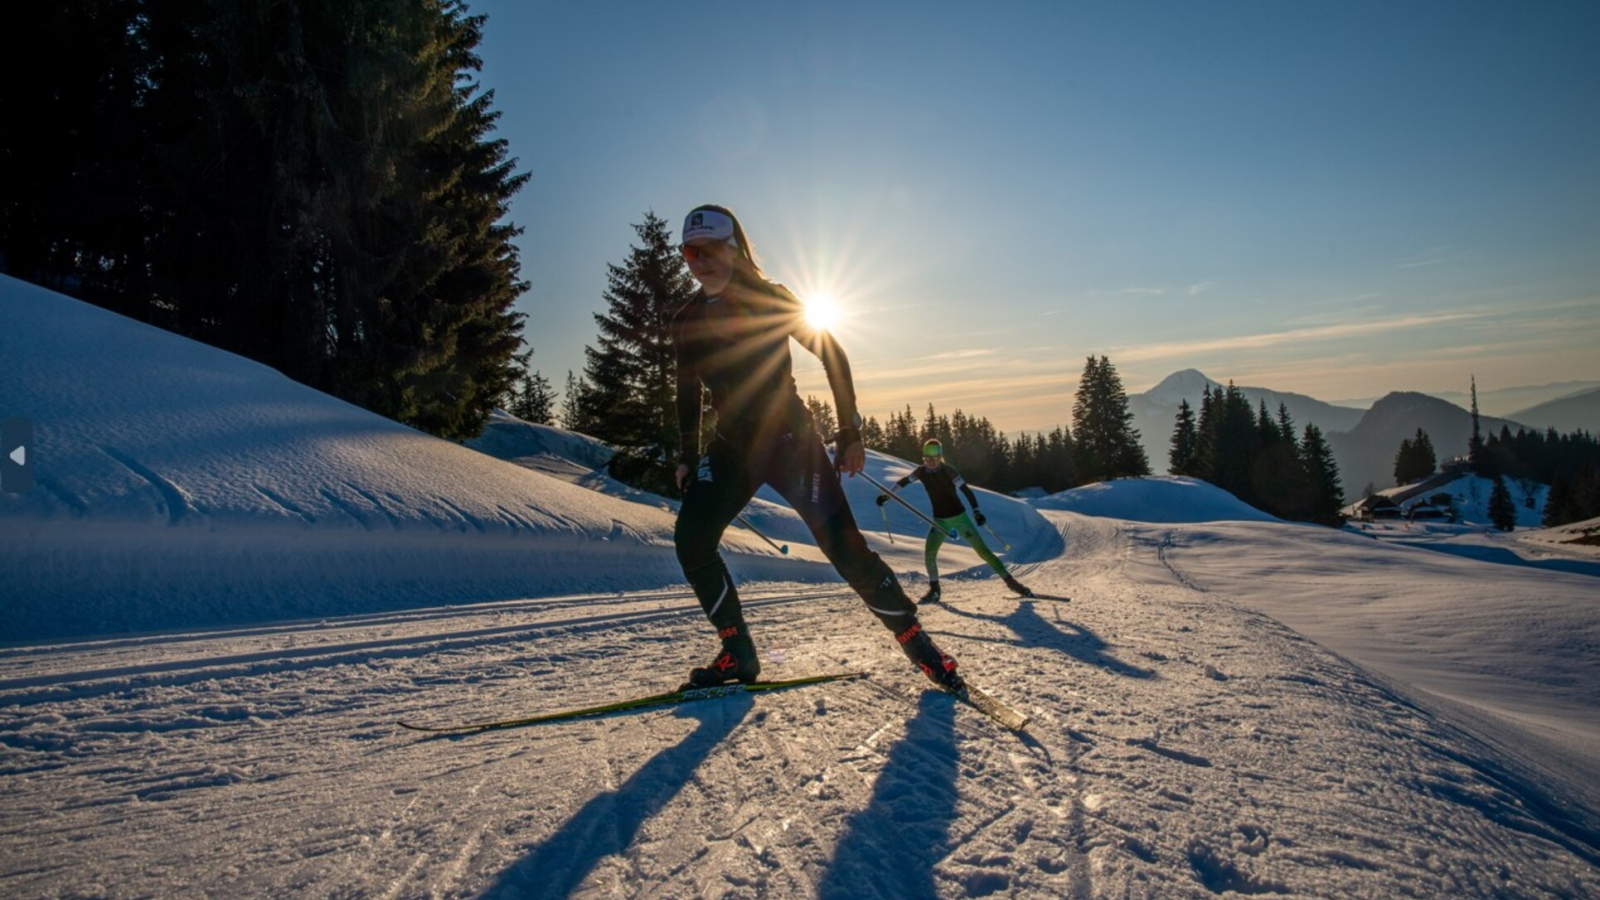 Léonie Harivel on the cross-country ski trails